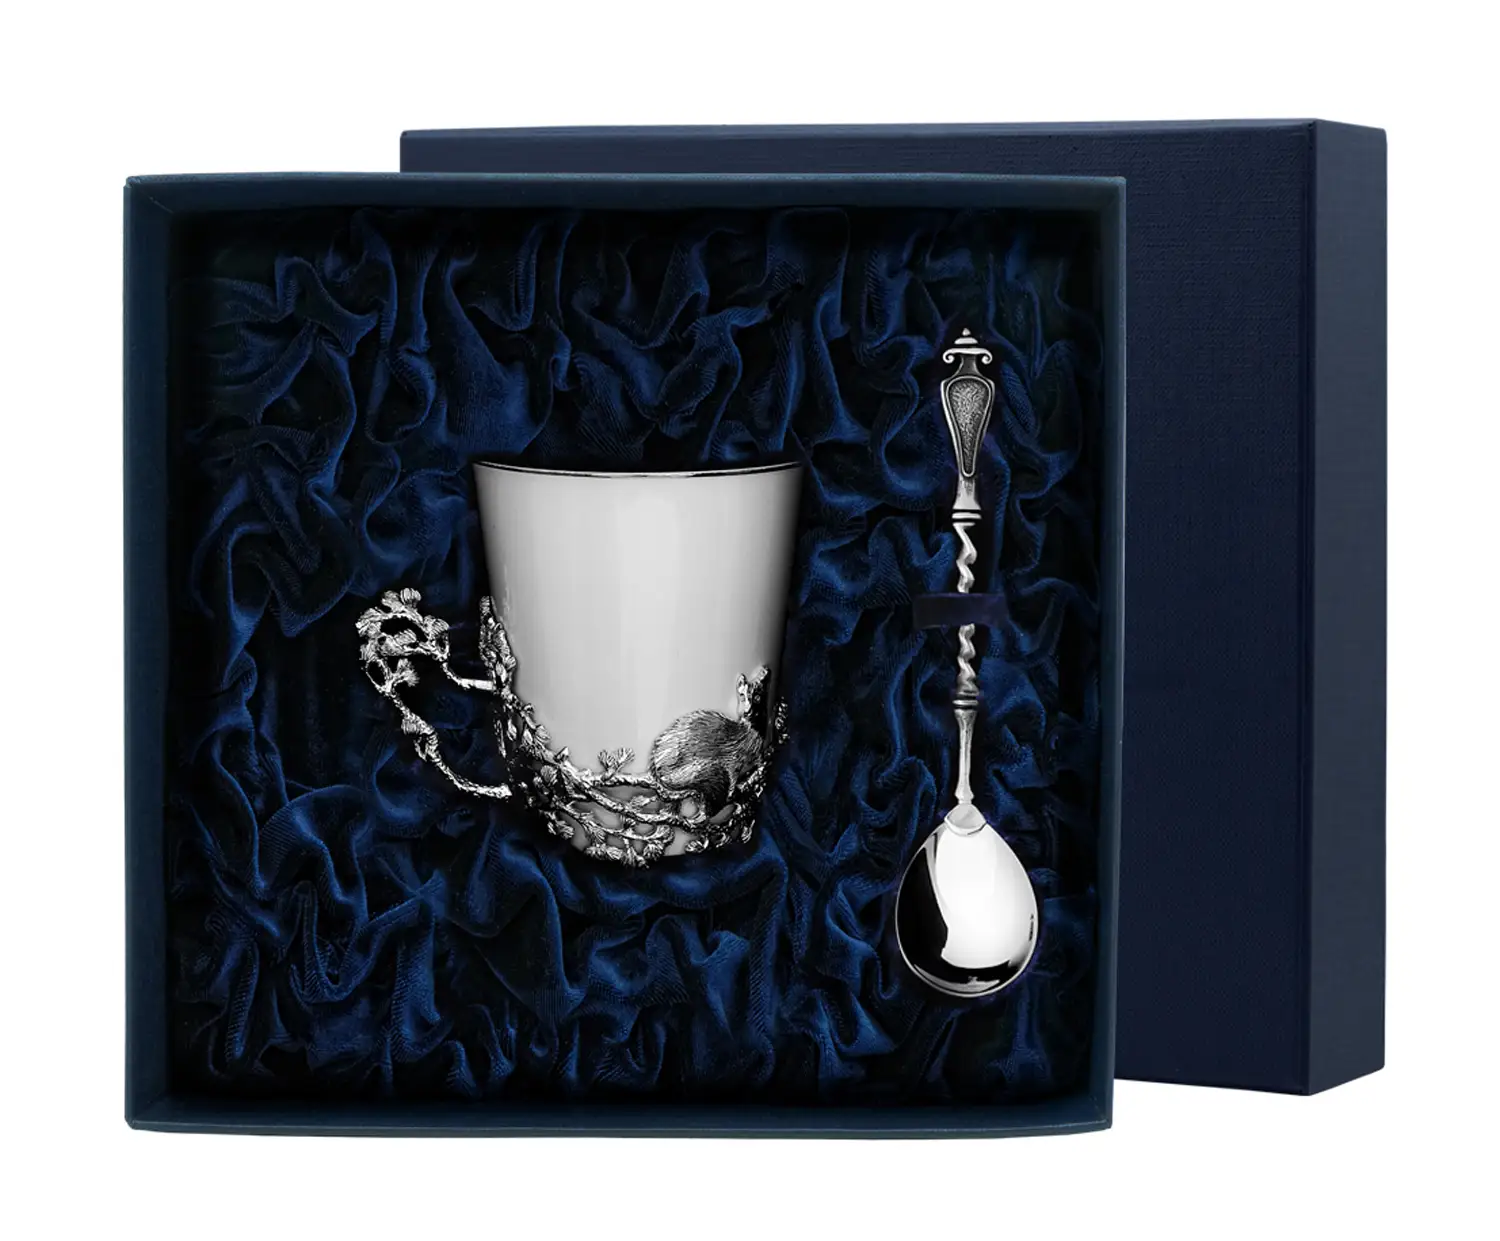 Набор чайная чашка Куница: ложка, чашка (Серебро 925) набор чайная чашка император ложка чашка серебро 925